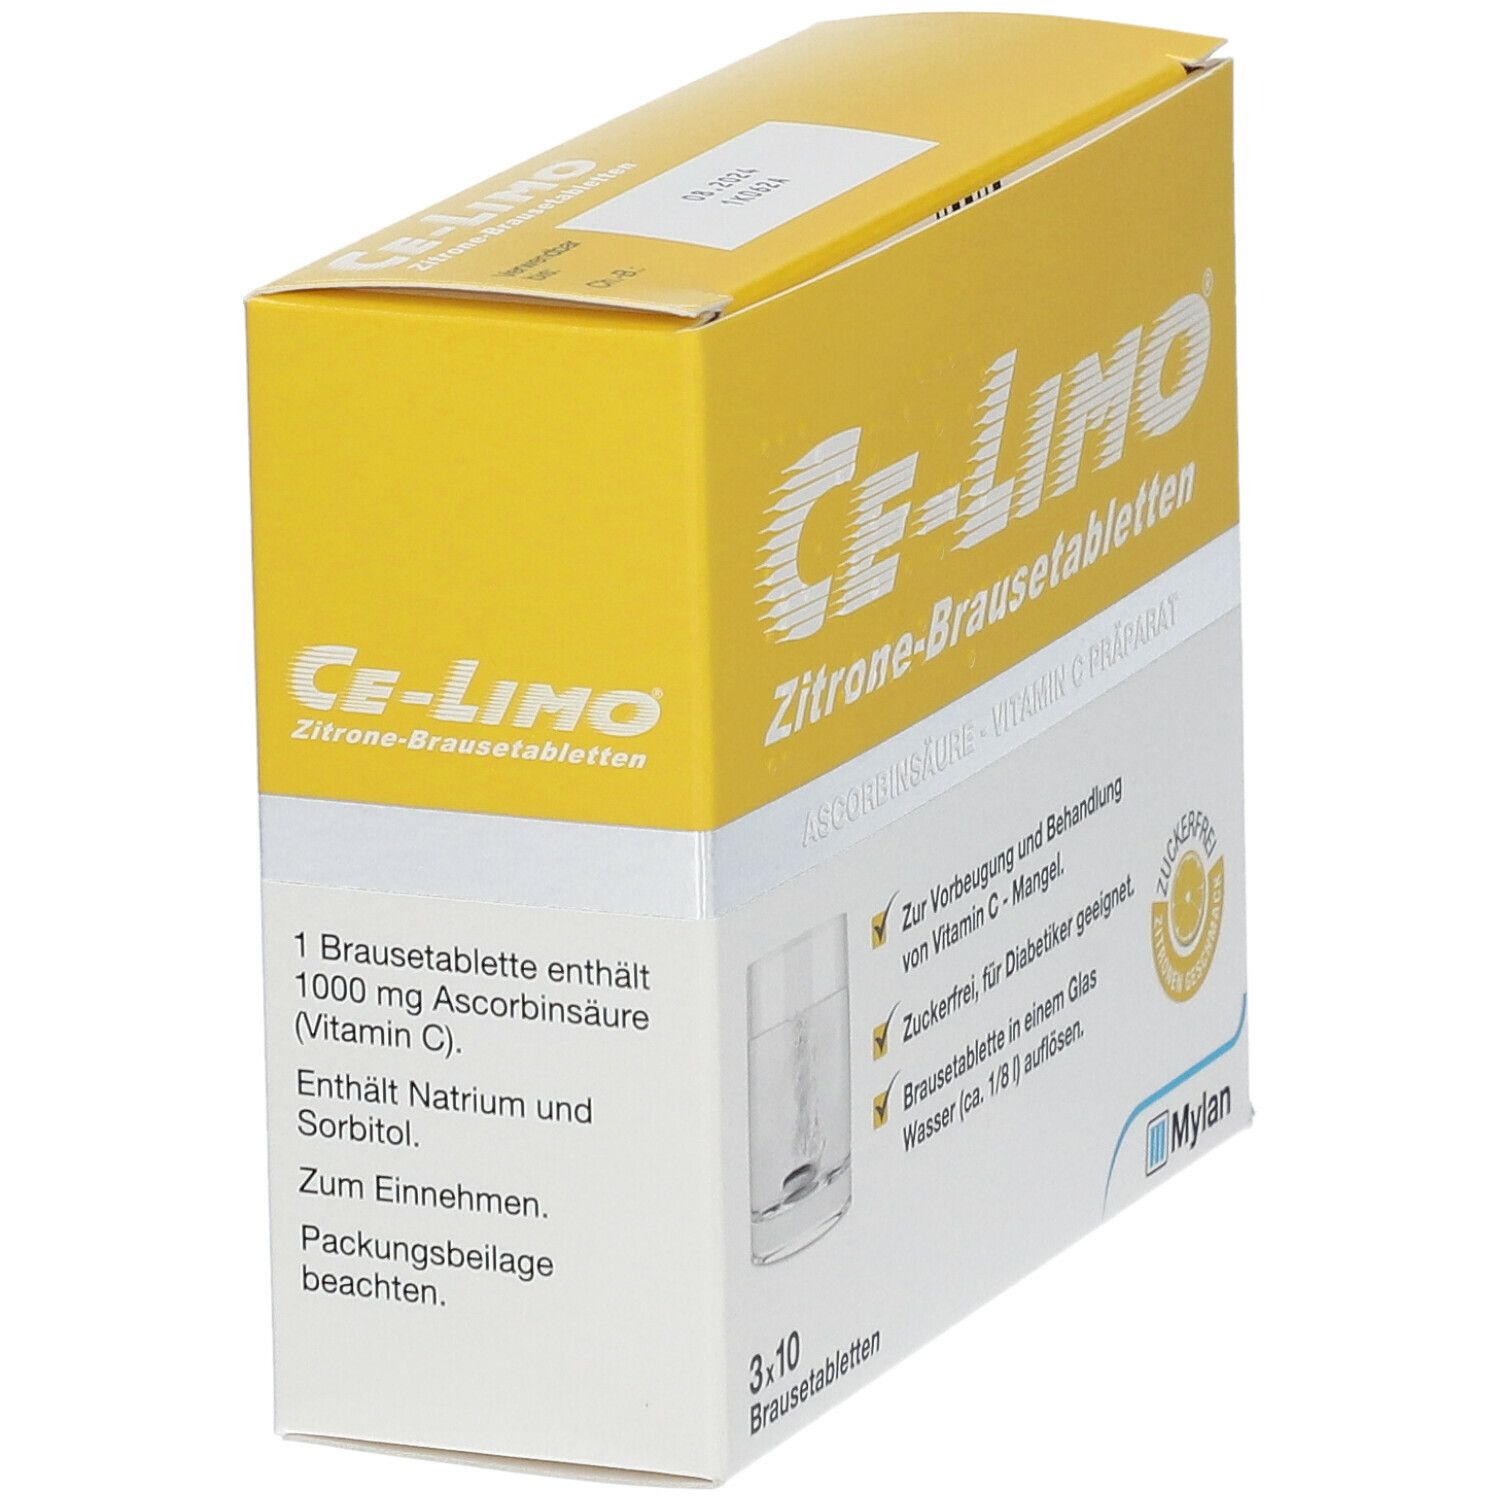 Ce-Limo® Zitrone-Brausetabletten